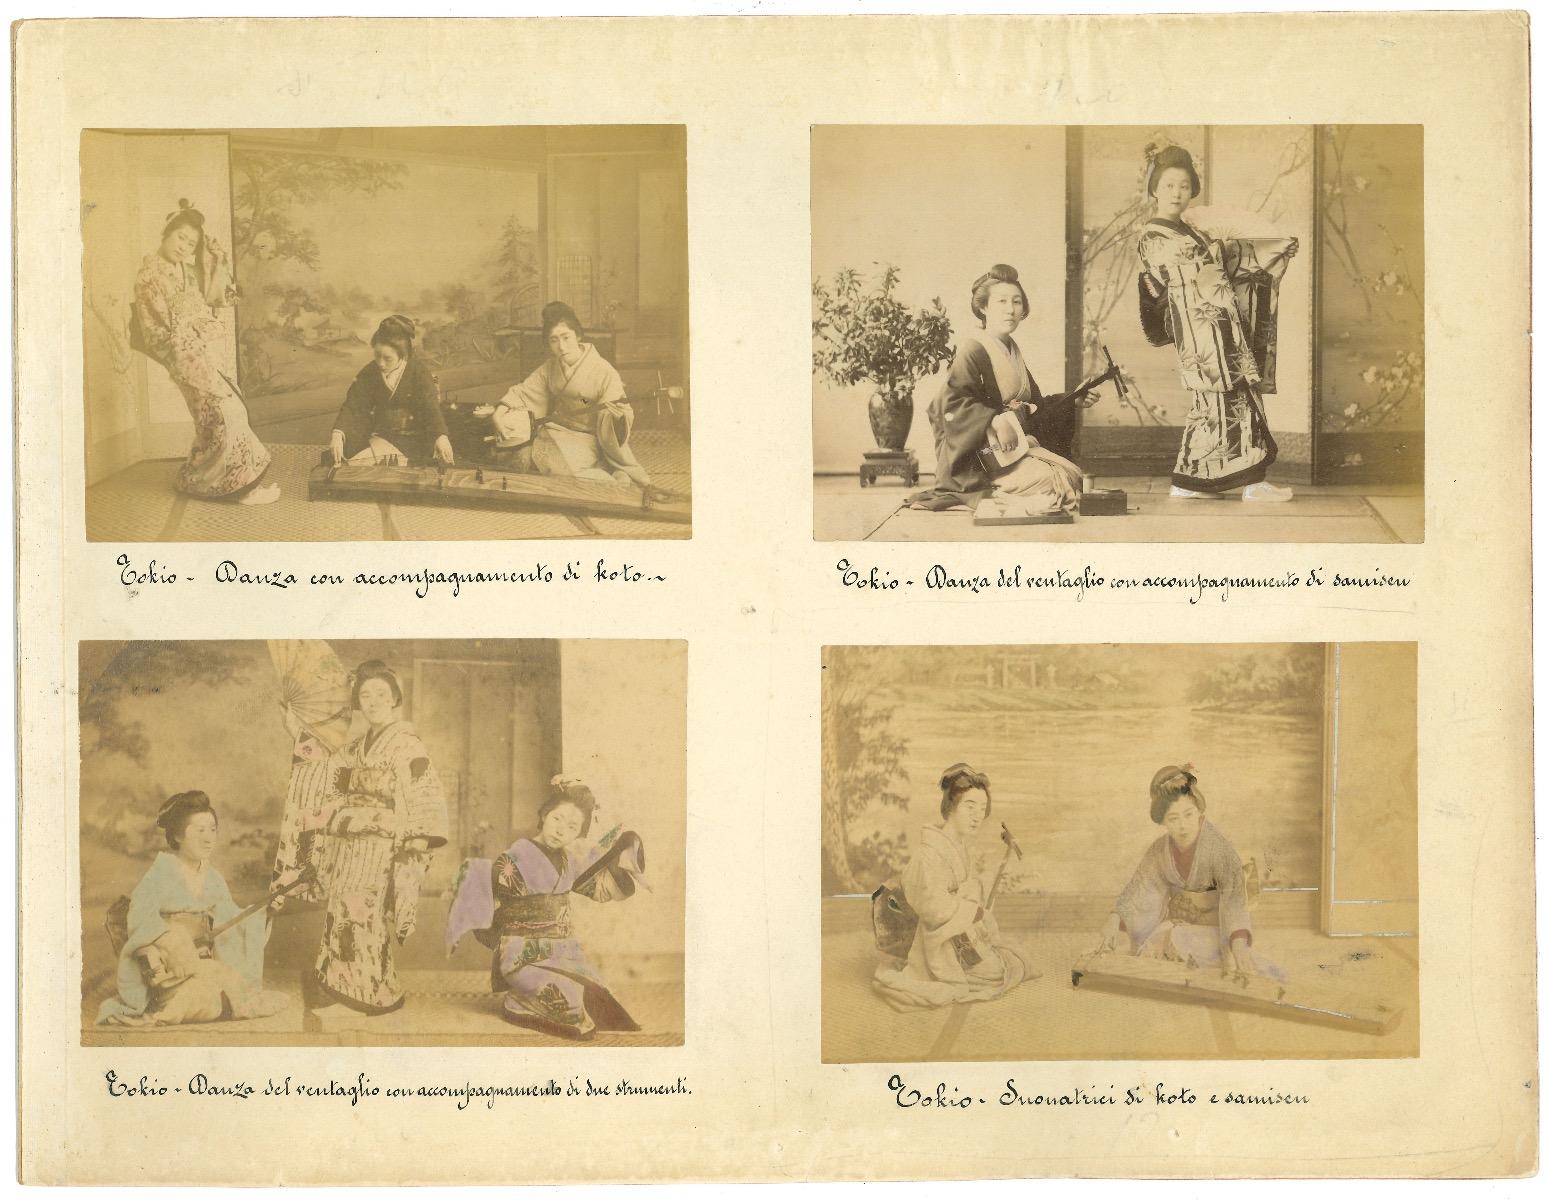 Unknown Figurative Photograph - Vintage Photos of Geishas from Tokyo - Original Albumen Prints - 1880s/90s